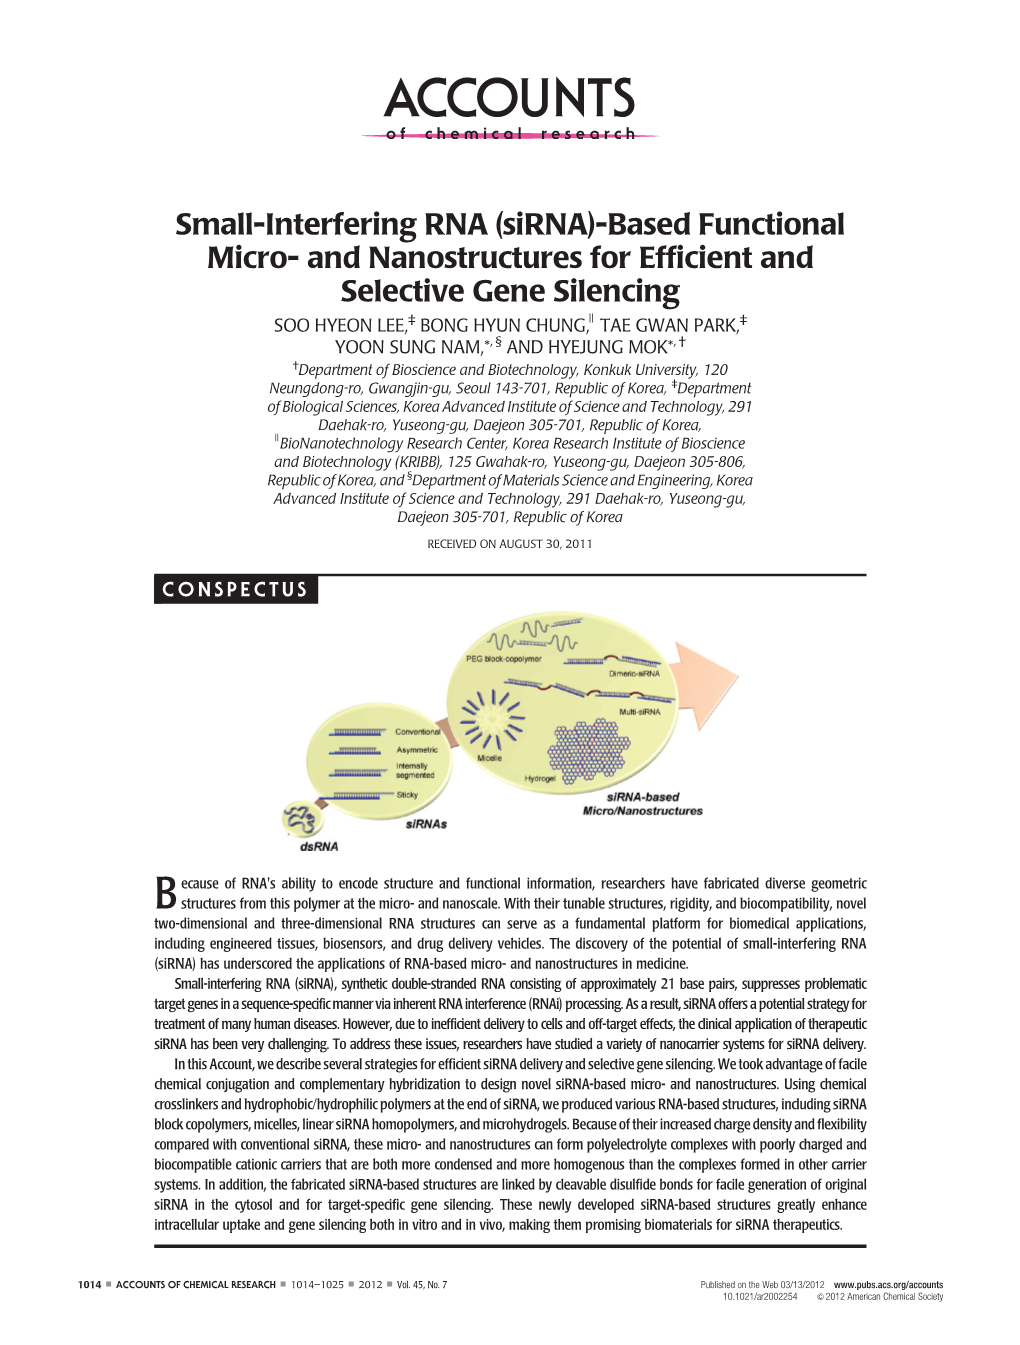 Small-Interfering RNA (Sirna)